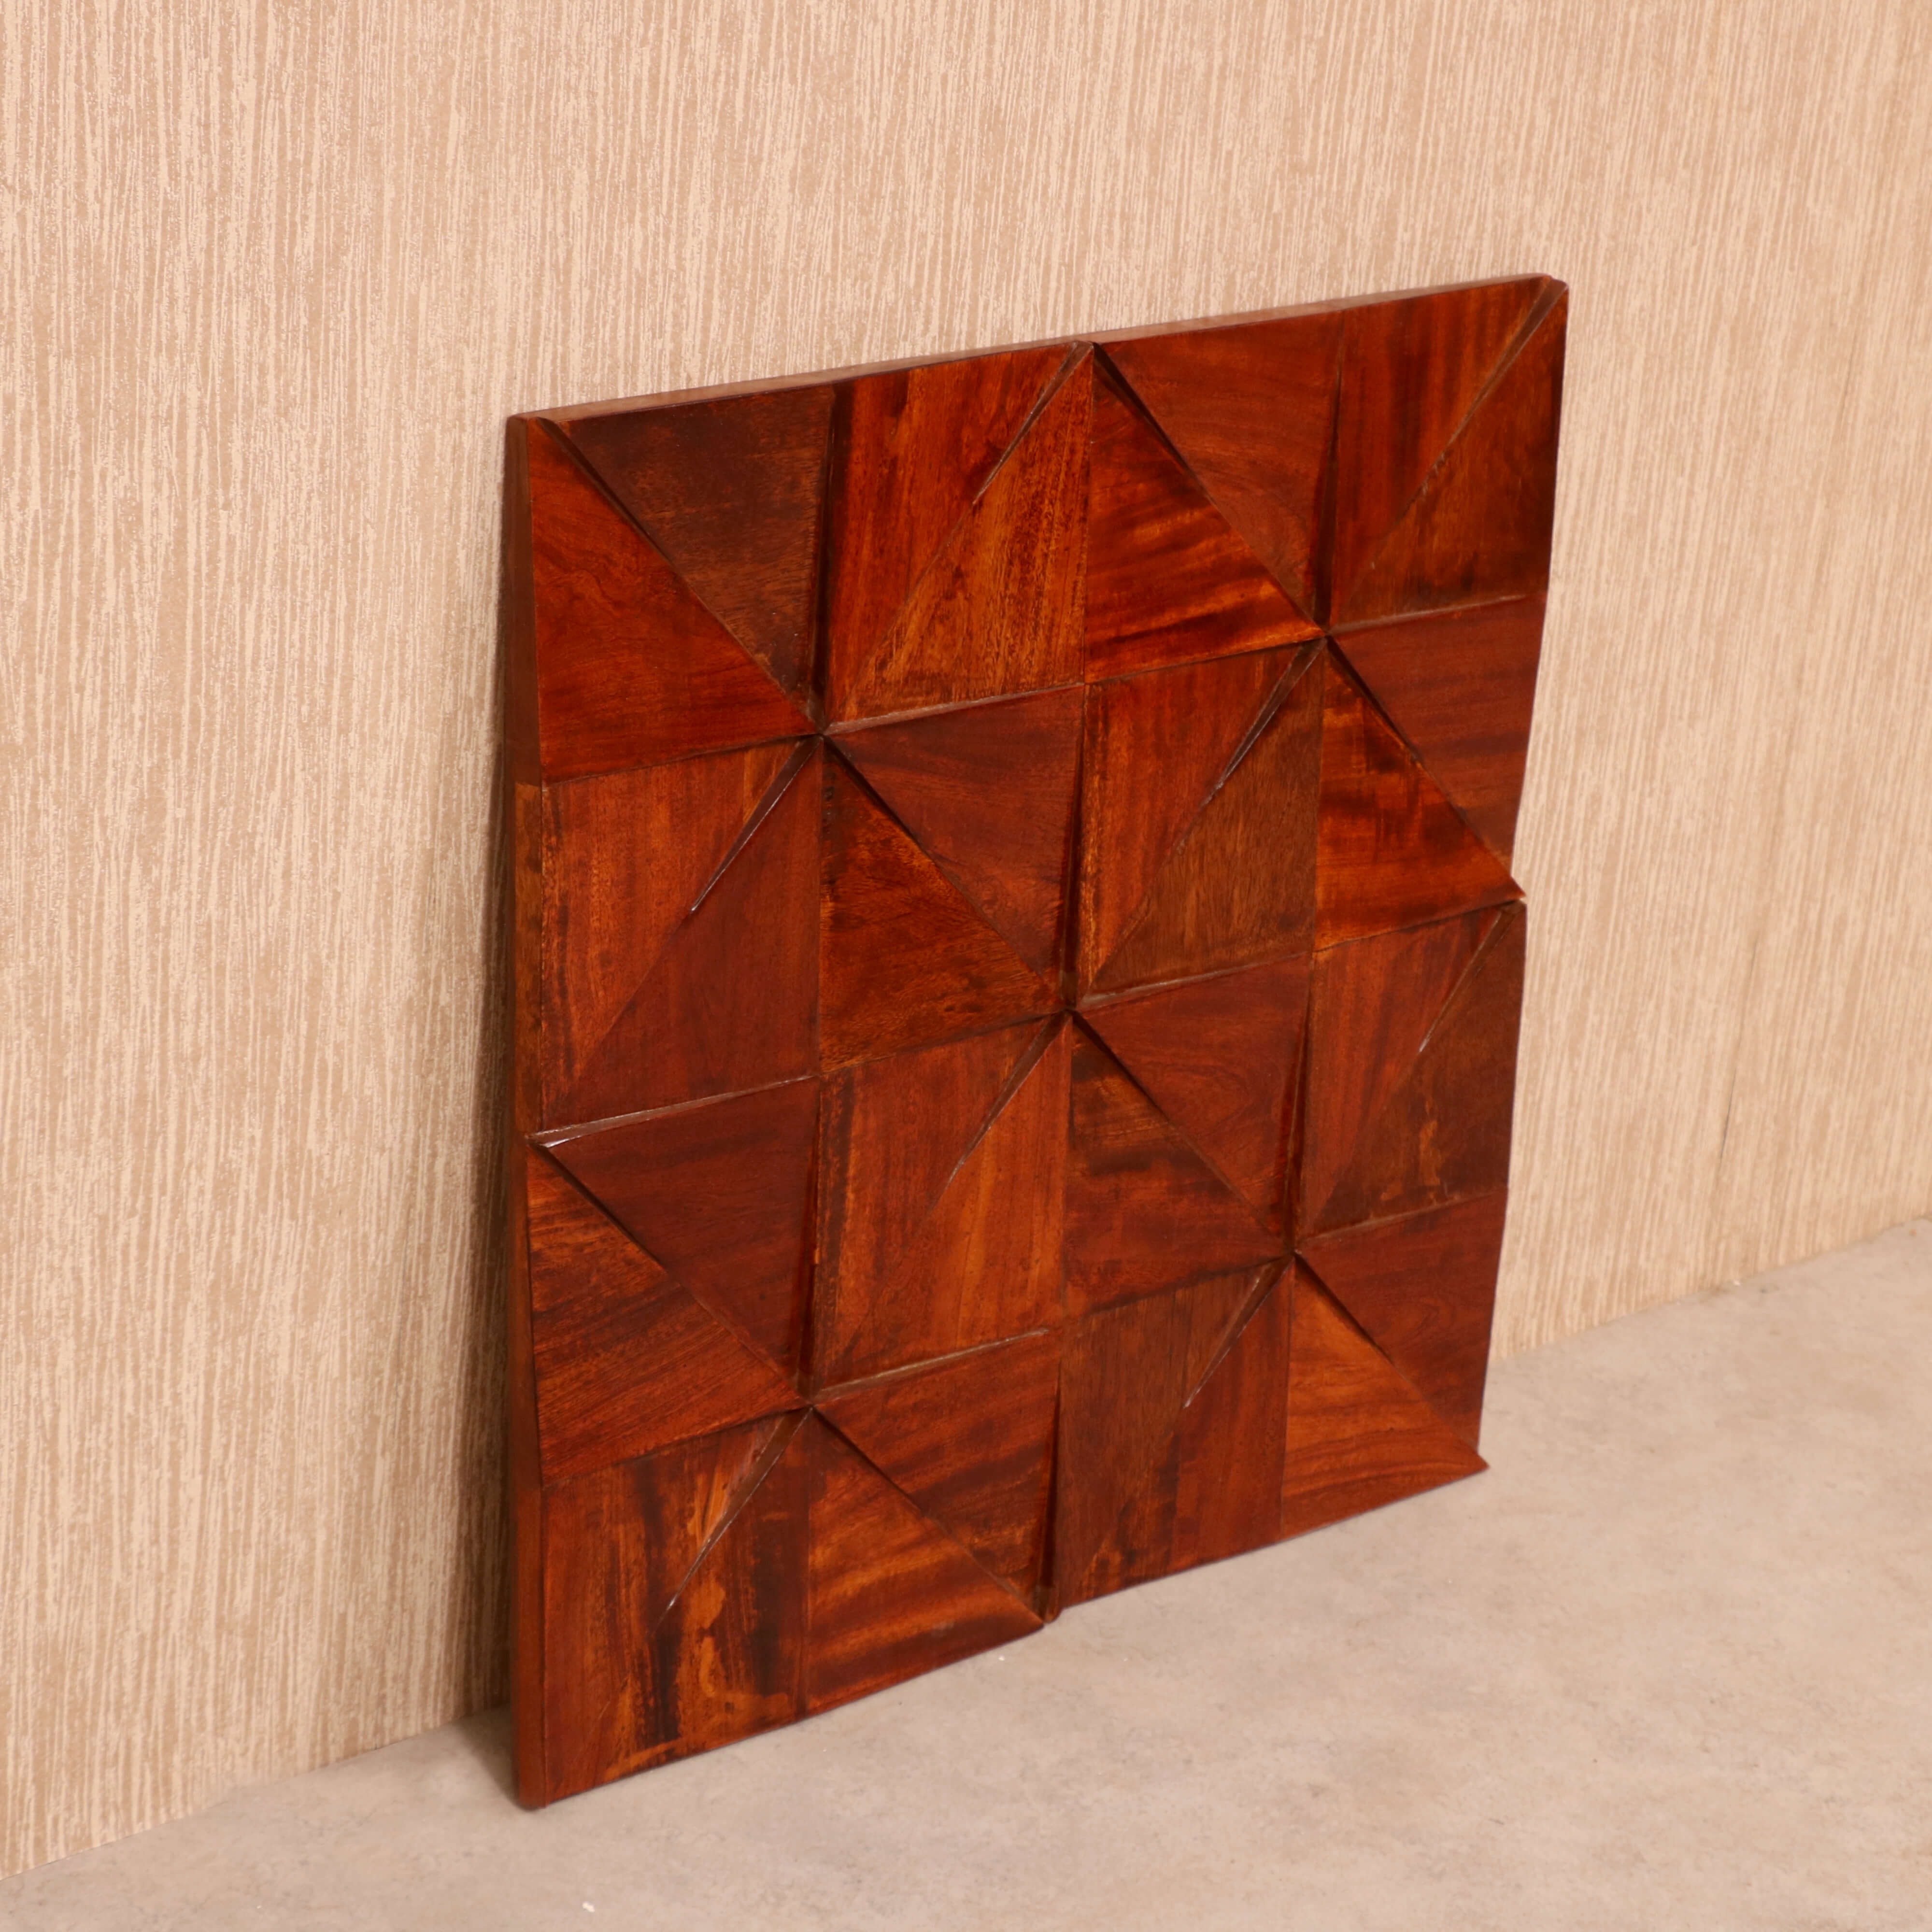 Simple Diamond Wooden Panel Wall Decor